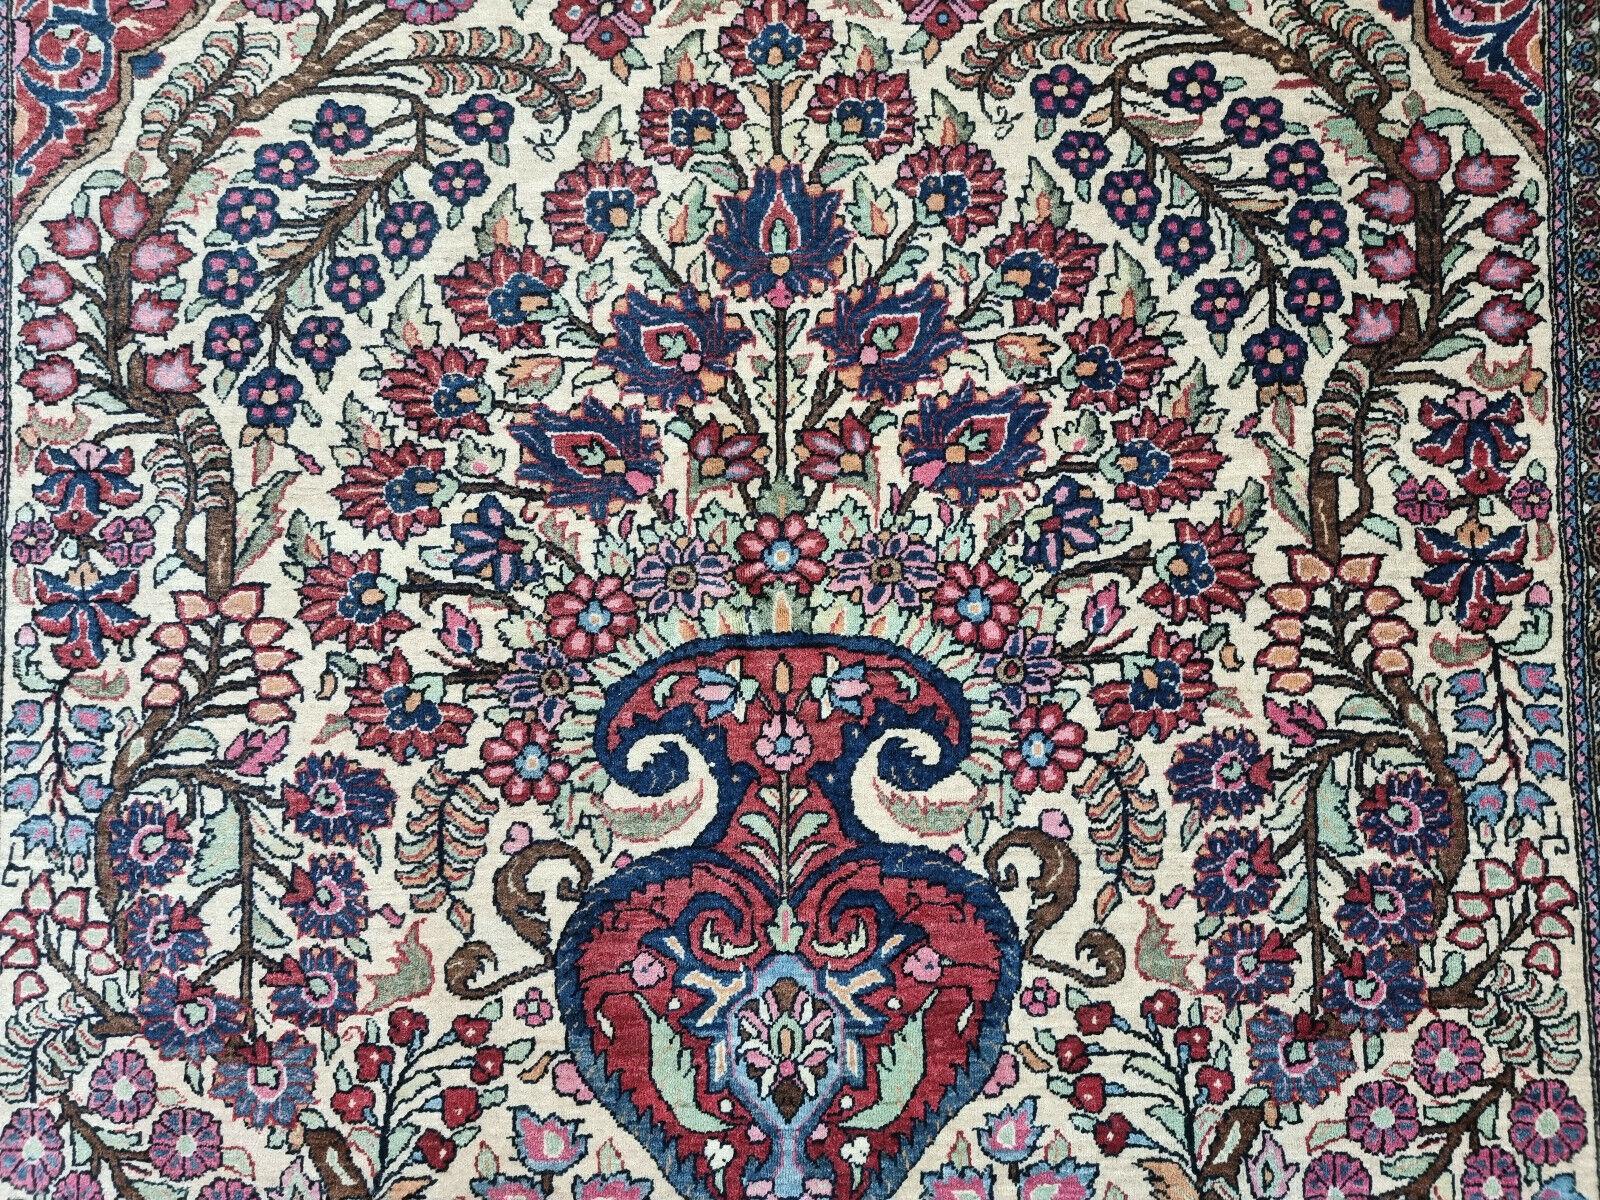 Silk Handmade Antique Persian Style Isfahan Prayer Rug 4.6' x 6.8', 1900s - 1D85 For Sale